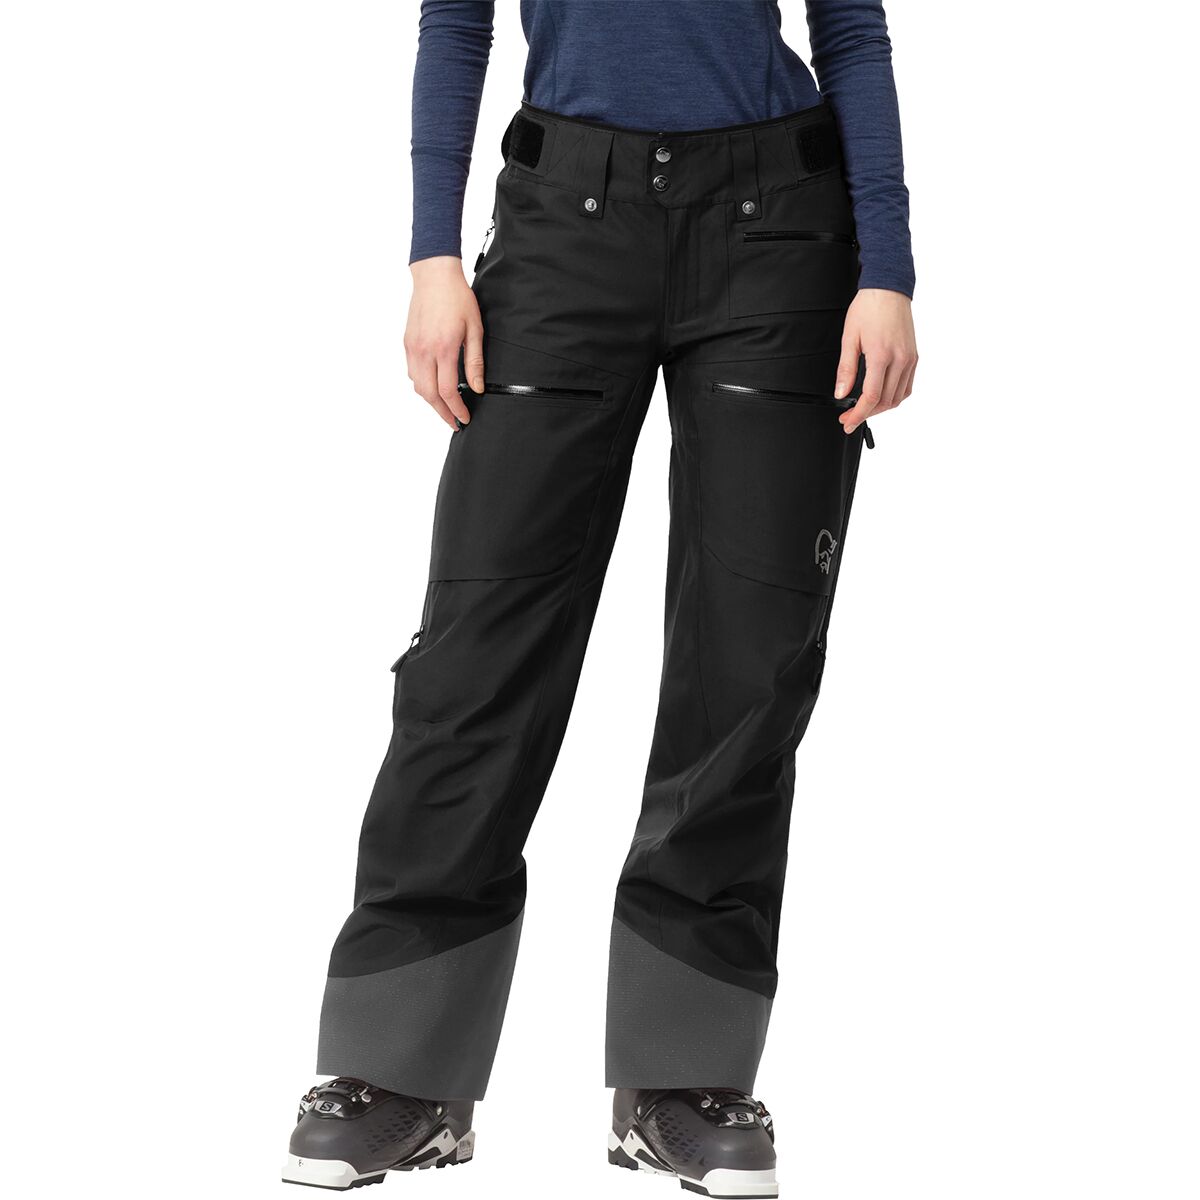 Lofoten GORE-TEX Insulated Pant - Women